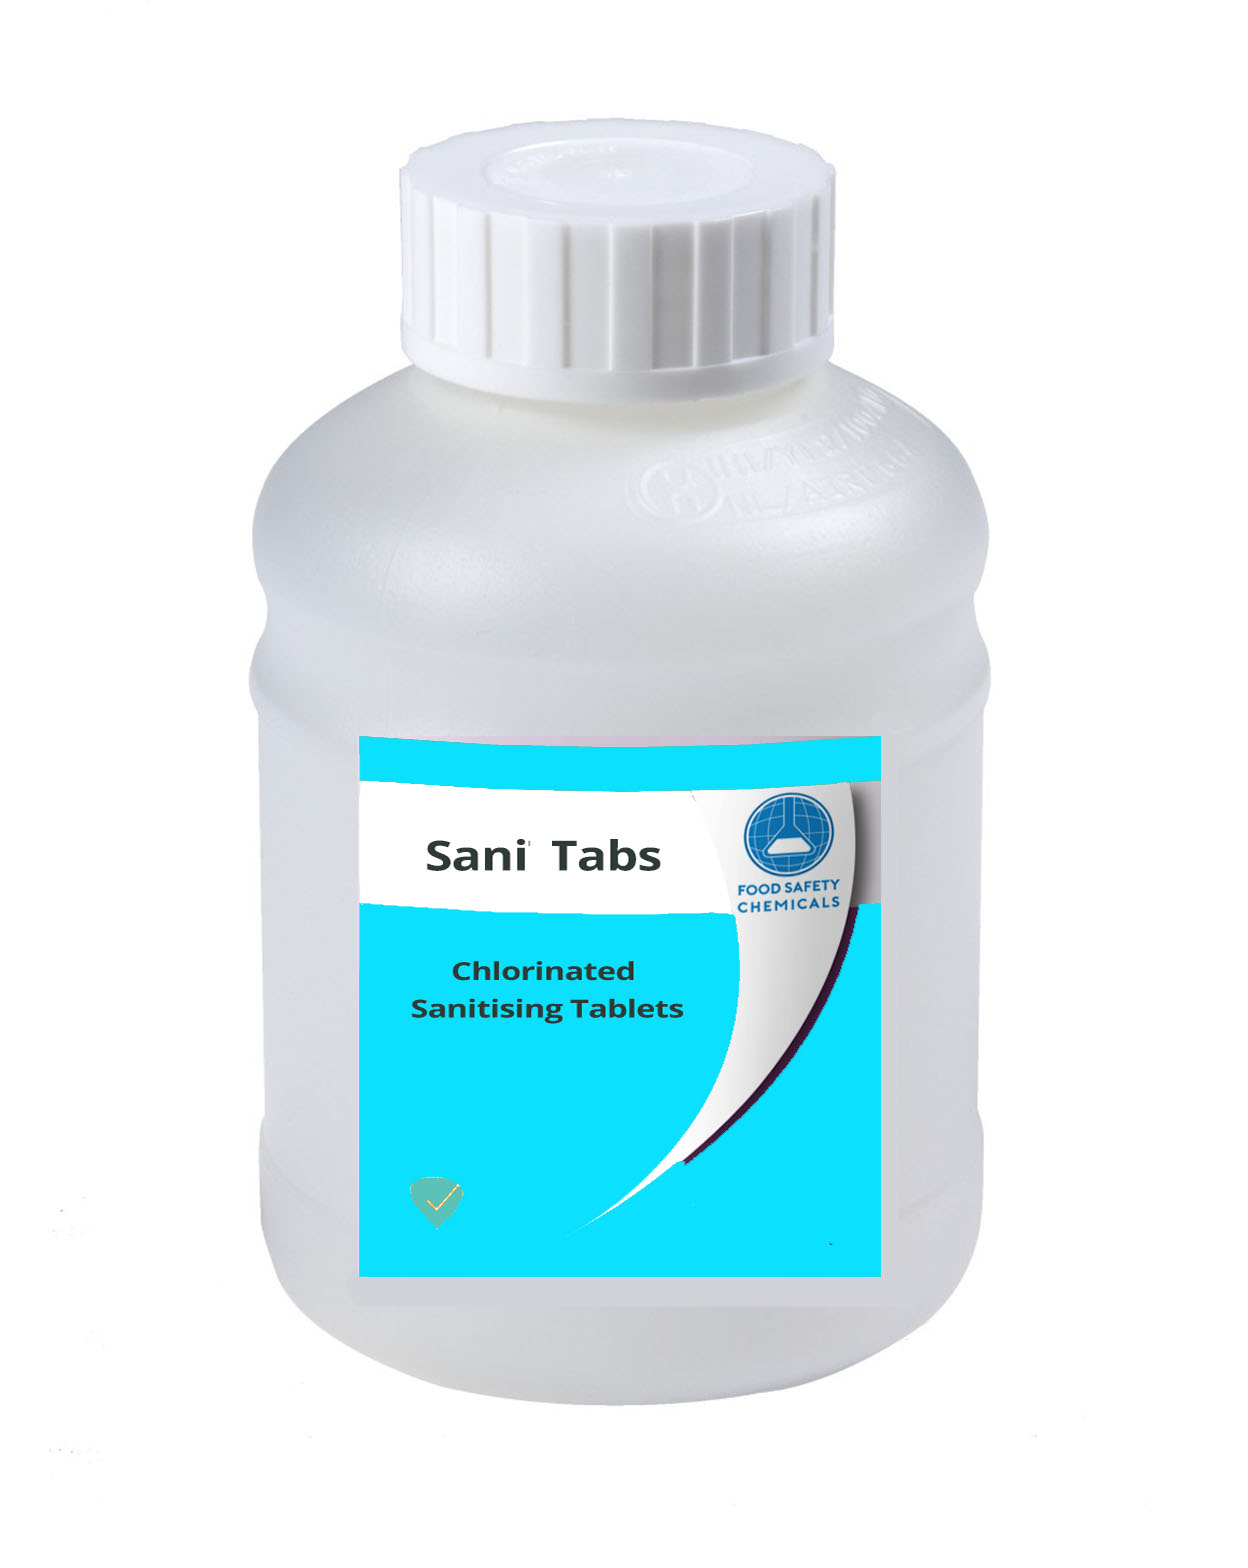 Sani Tabs – Chlorinated Sanitising Tablets